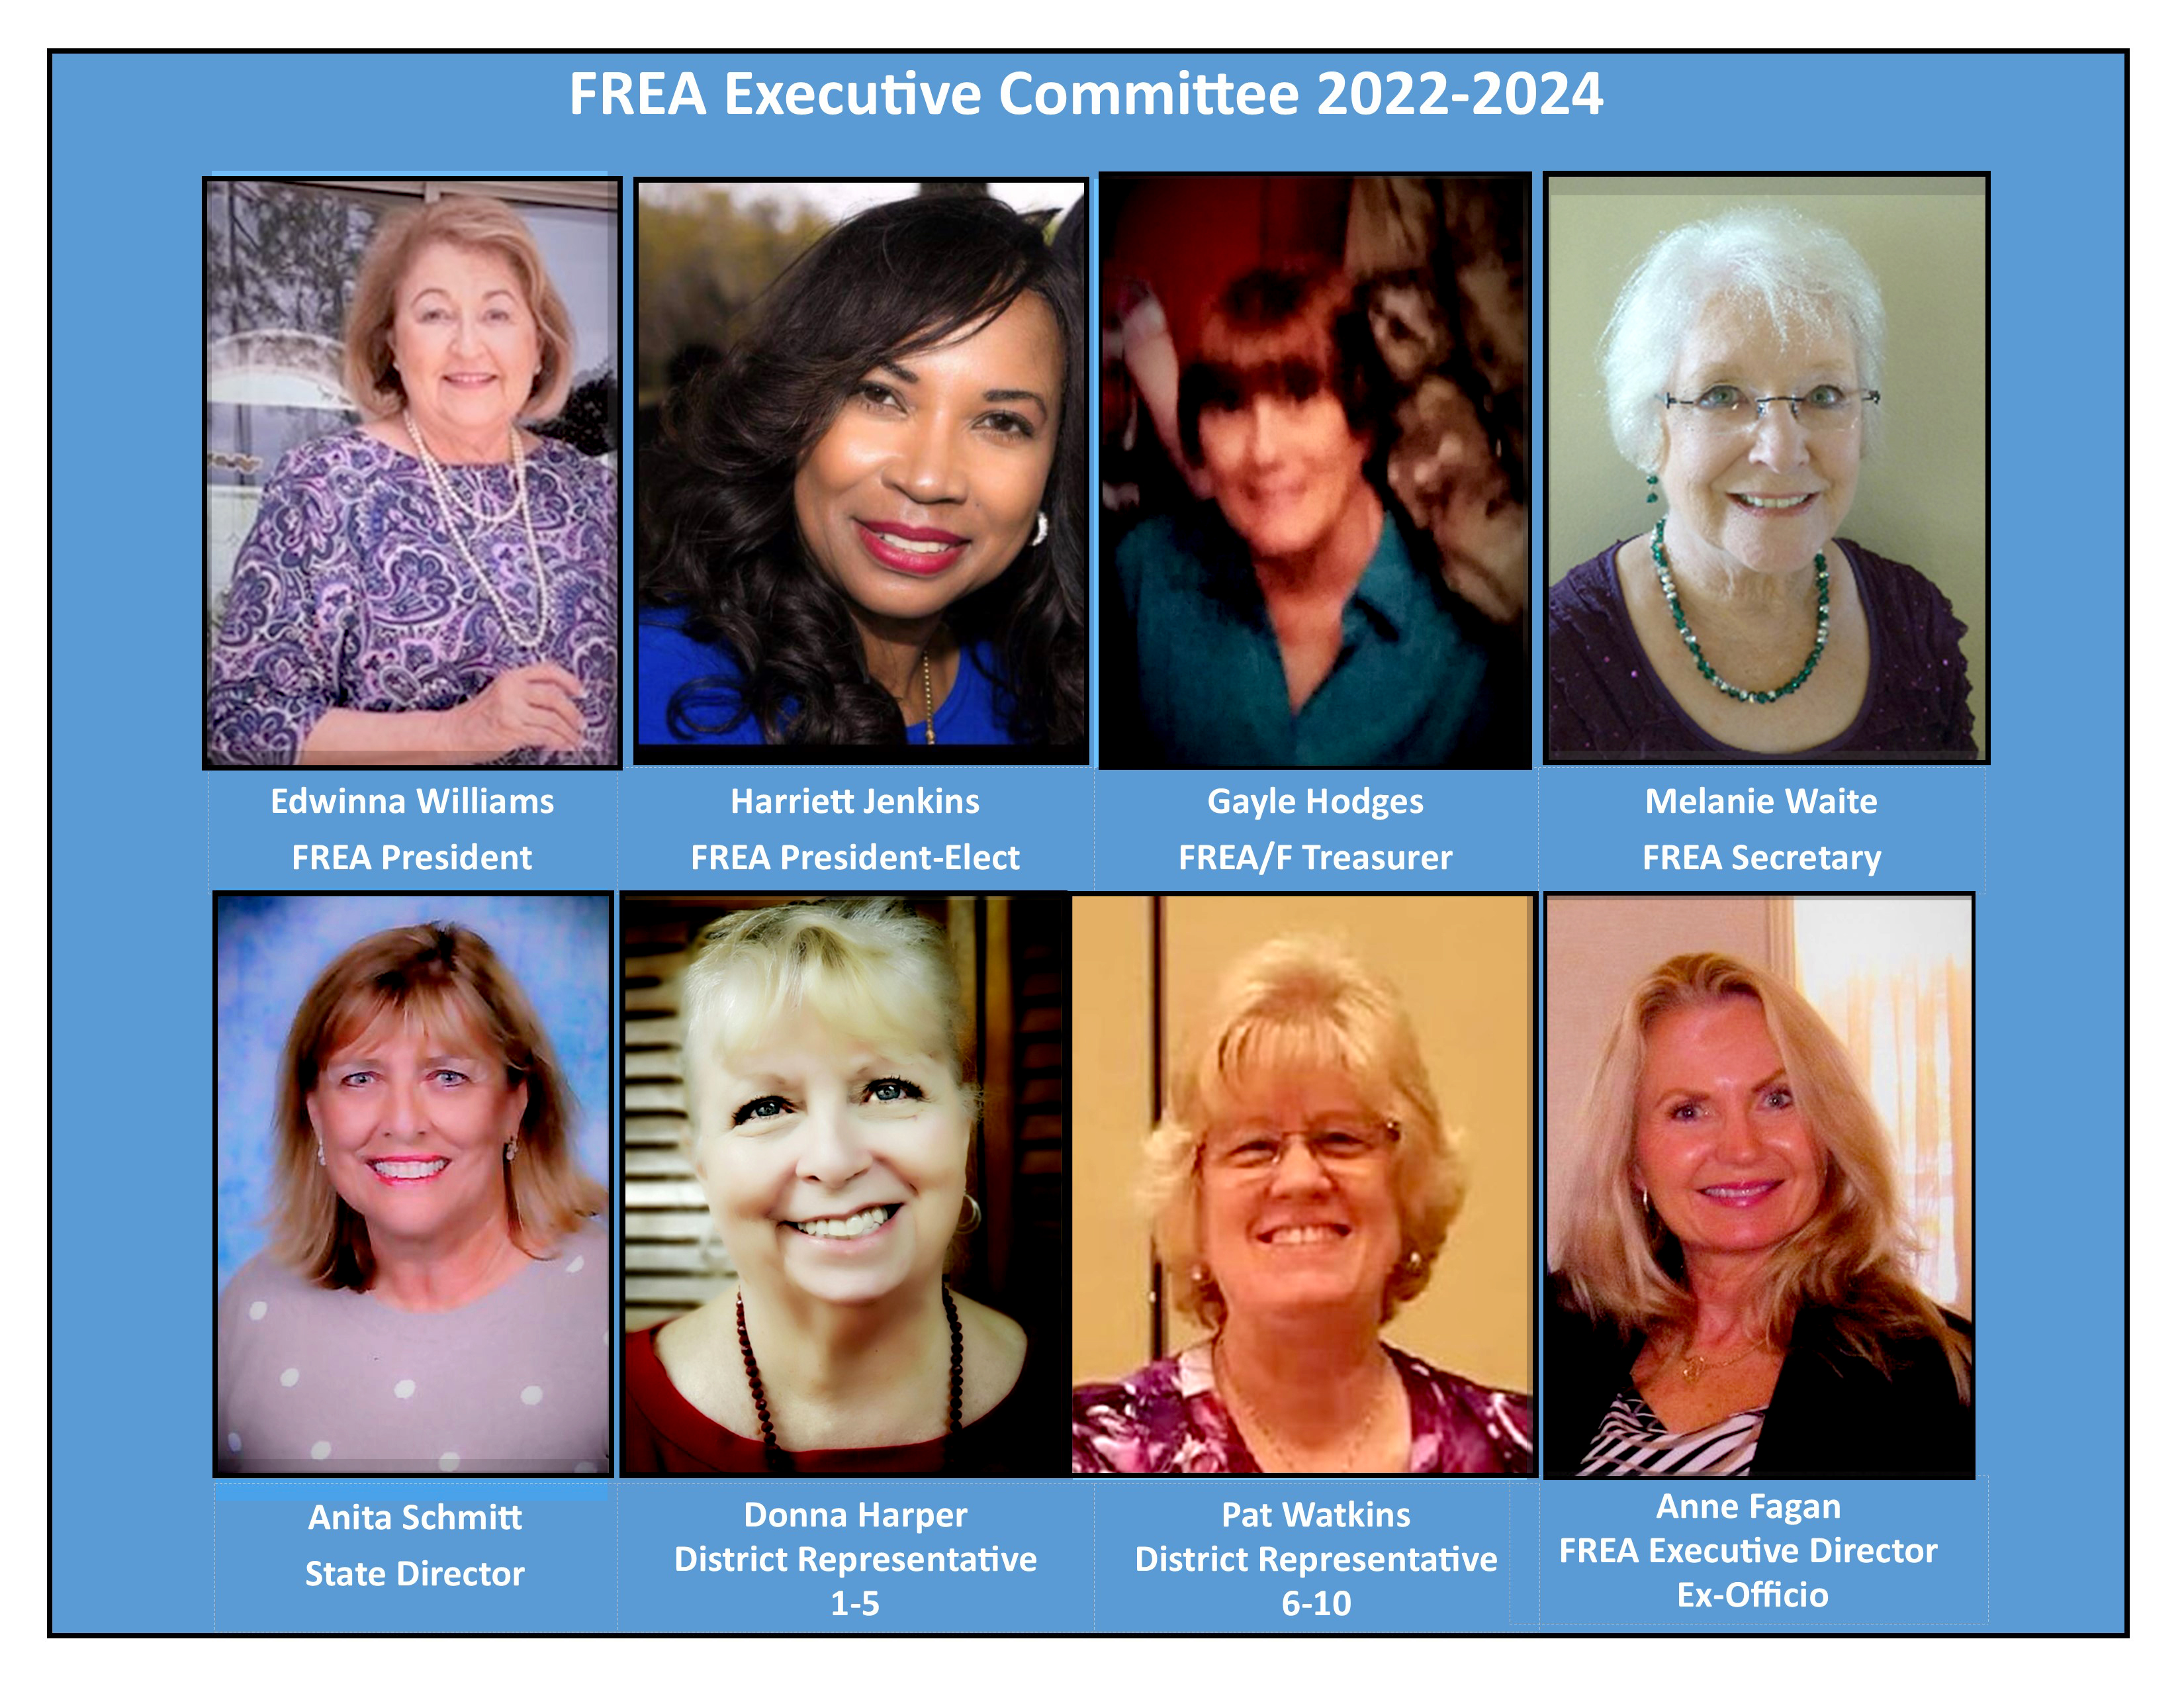 2023-2024 FREA Executive Committee:  
 